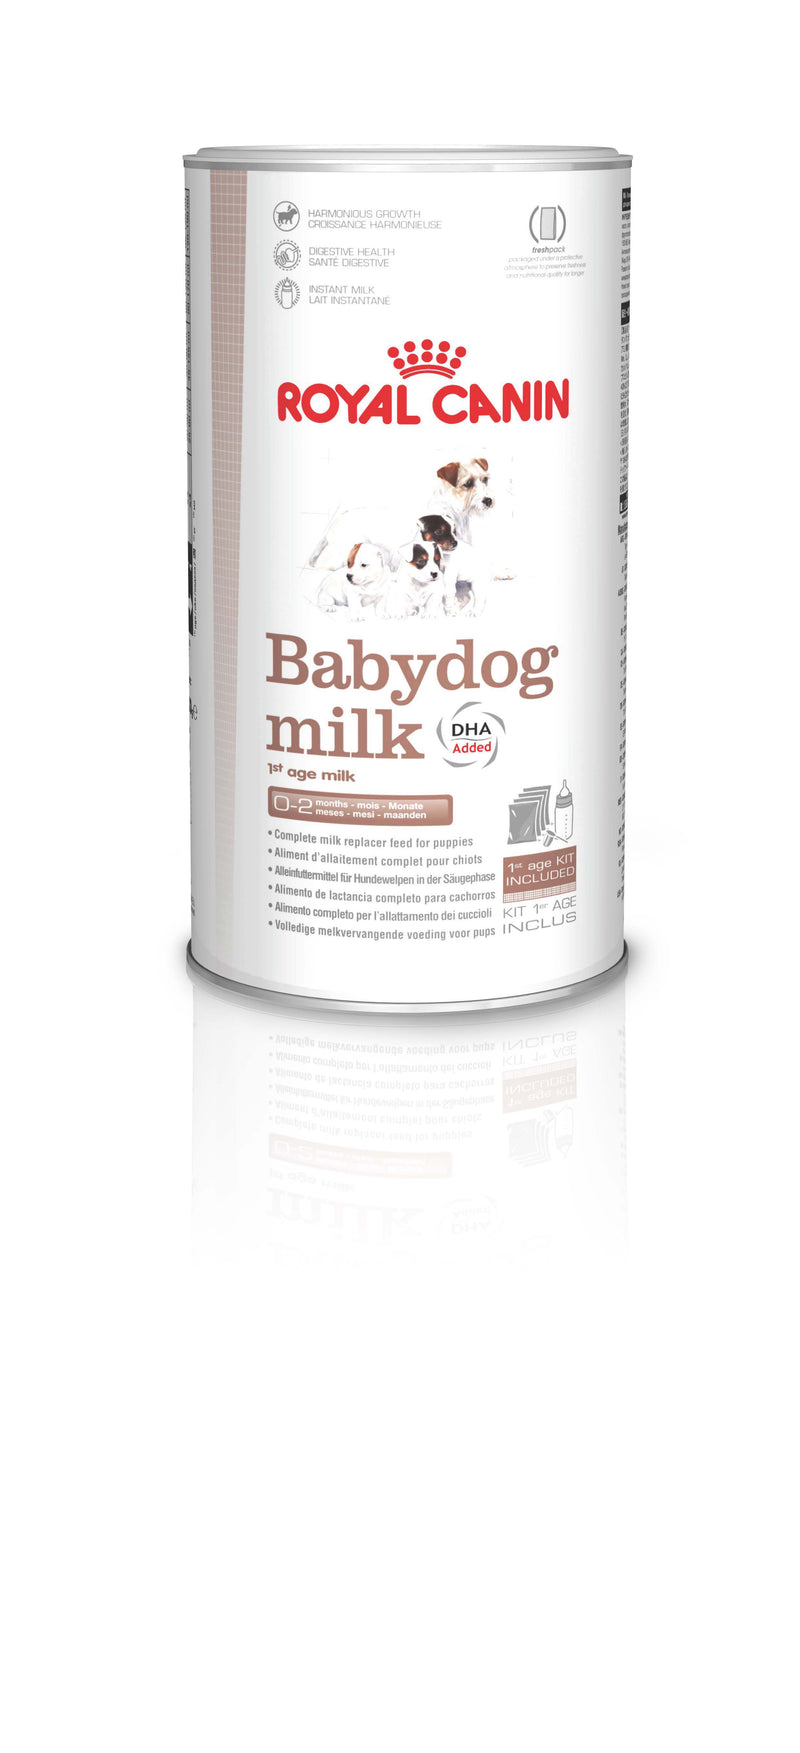 Royal Canin Babydog Milk, 2kg x 4 Pack